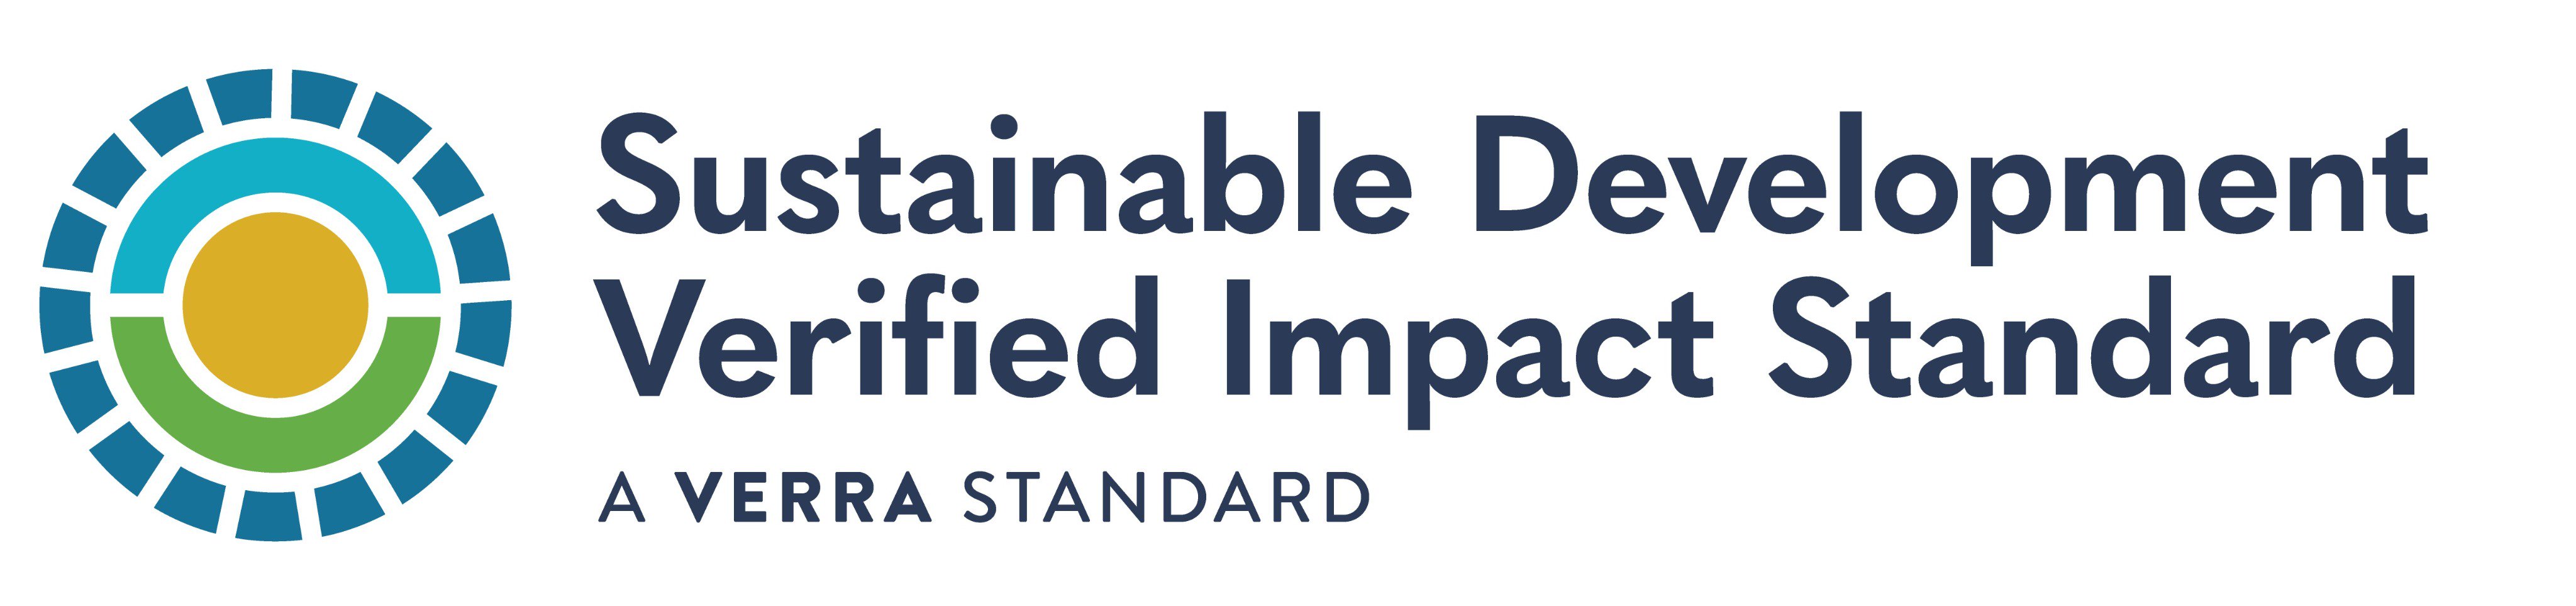 Certification - Sustainable Development Verified Impact Standard Logo